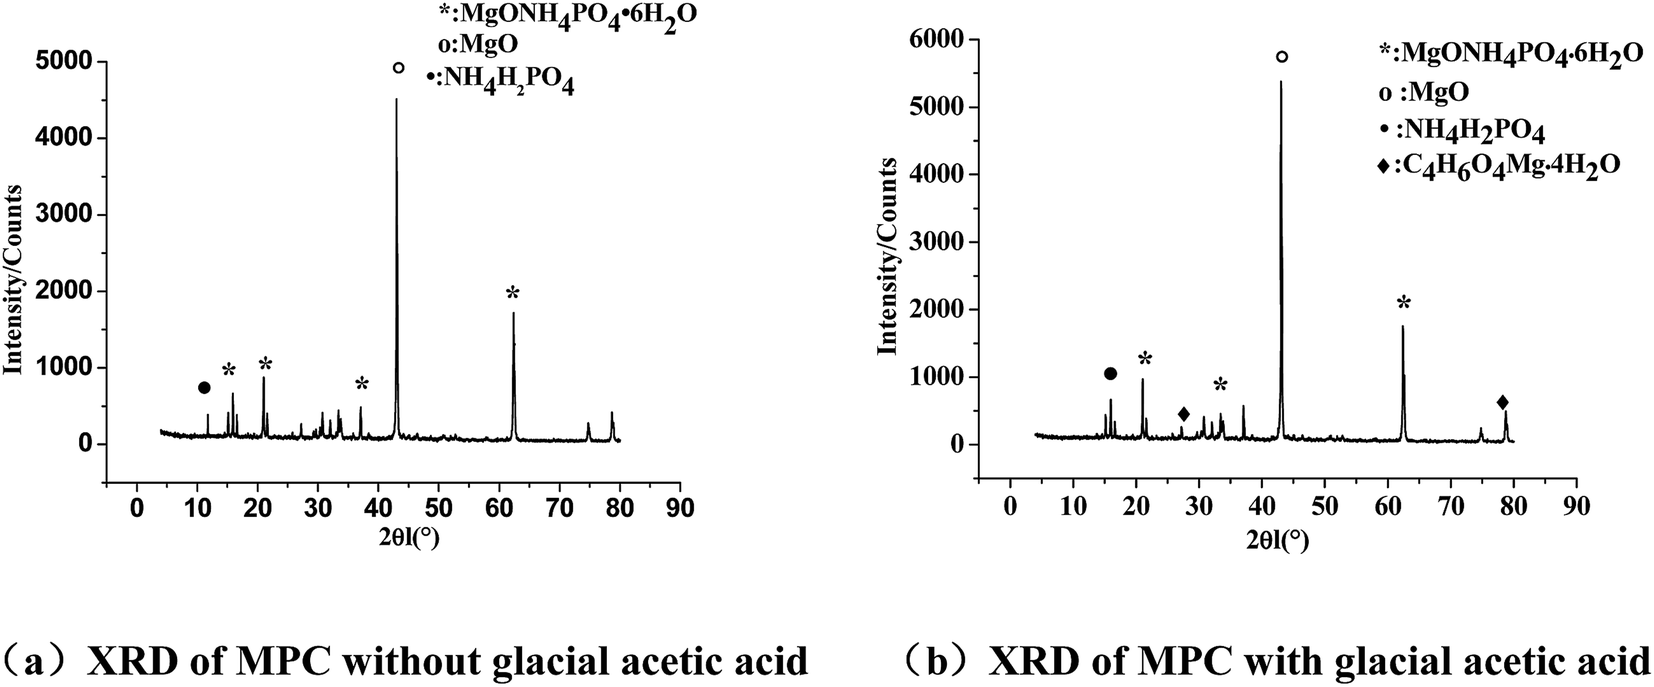 Retardation and reaction mechanisms of magnesium phosphate cement mixed  with glacial acetic acid - RSC Advances (RSC Publishing)  DOI:10.1039/C7RA08383A